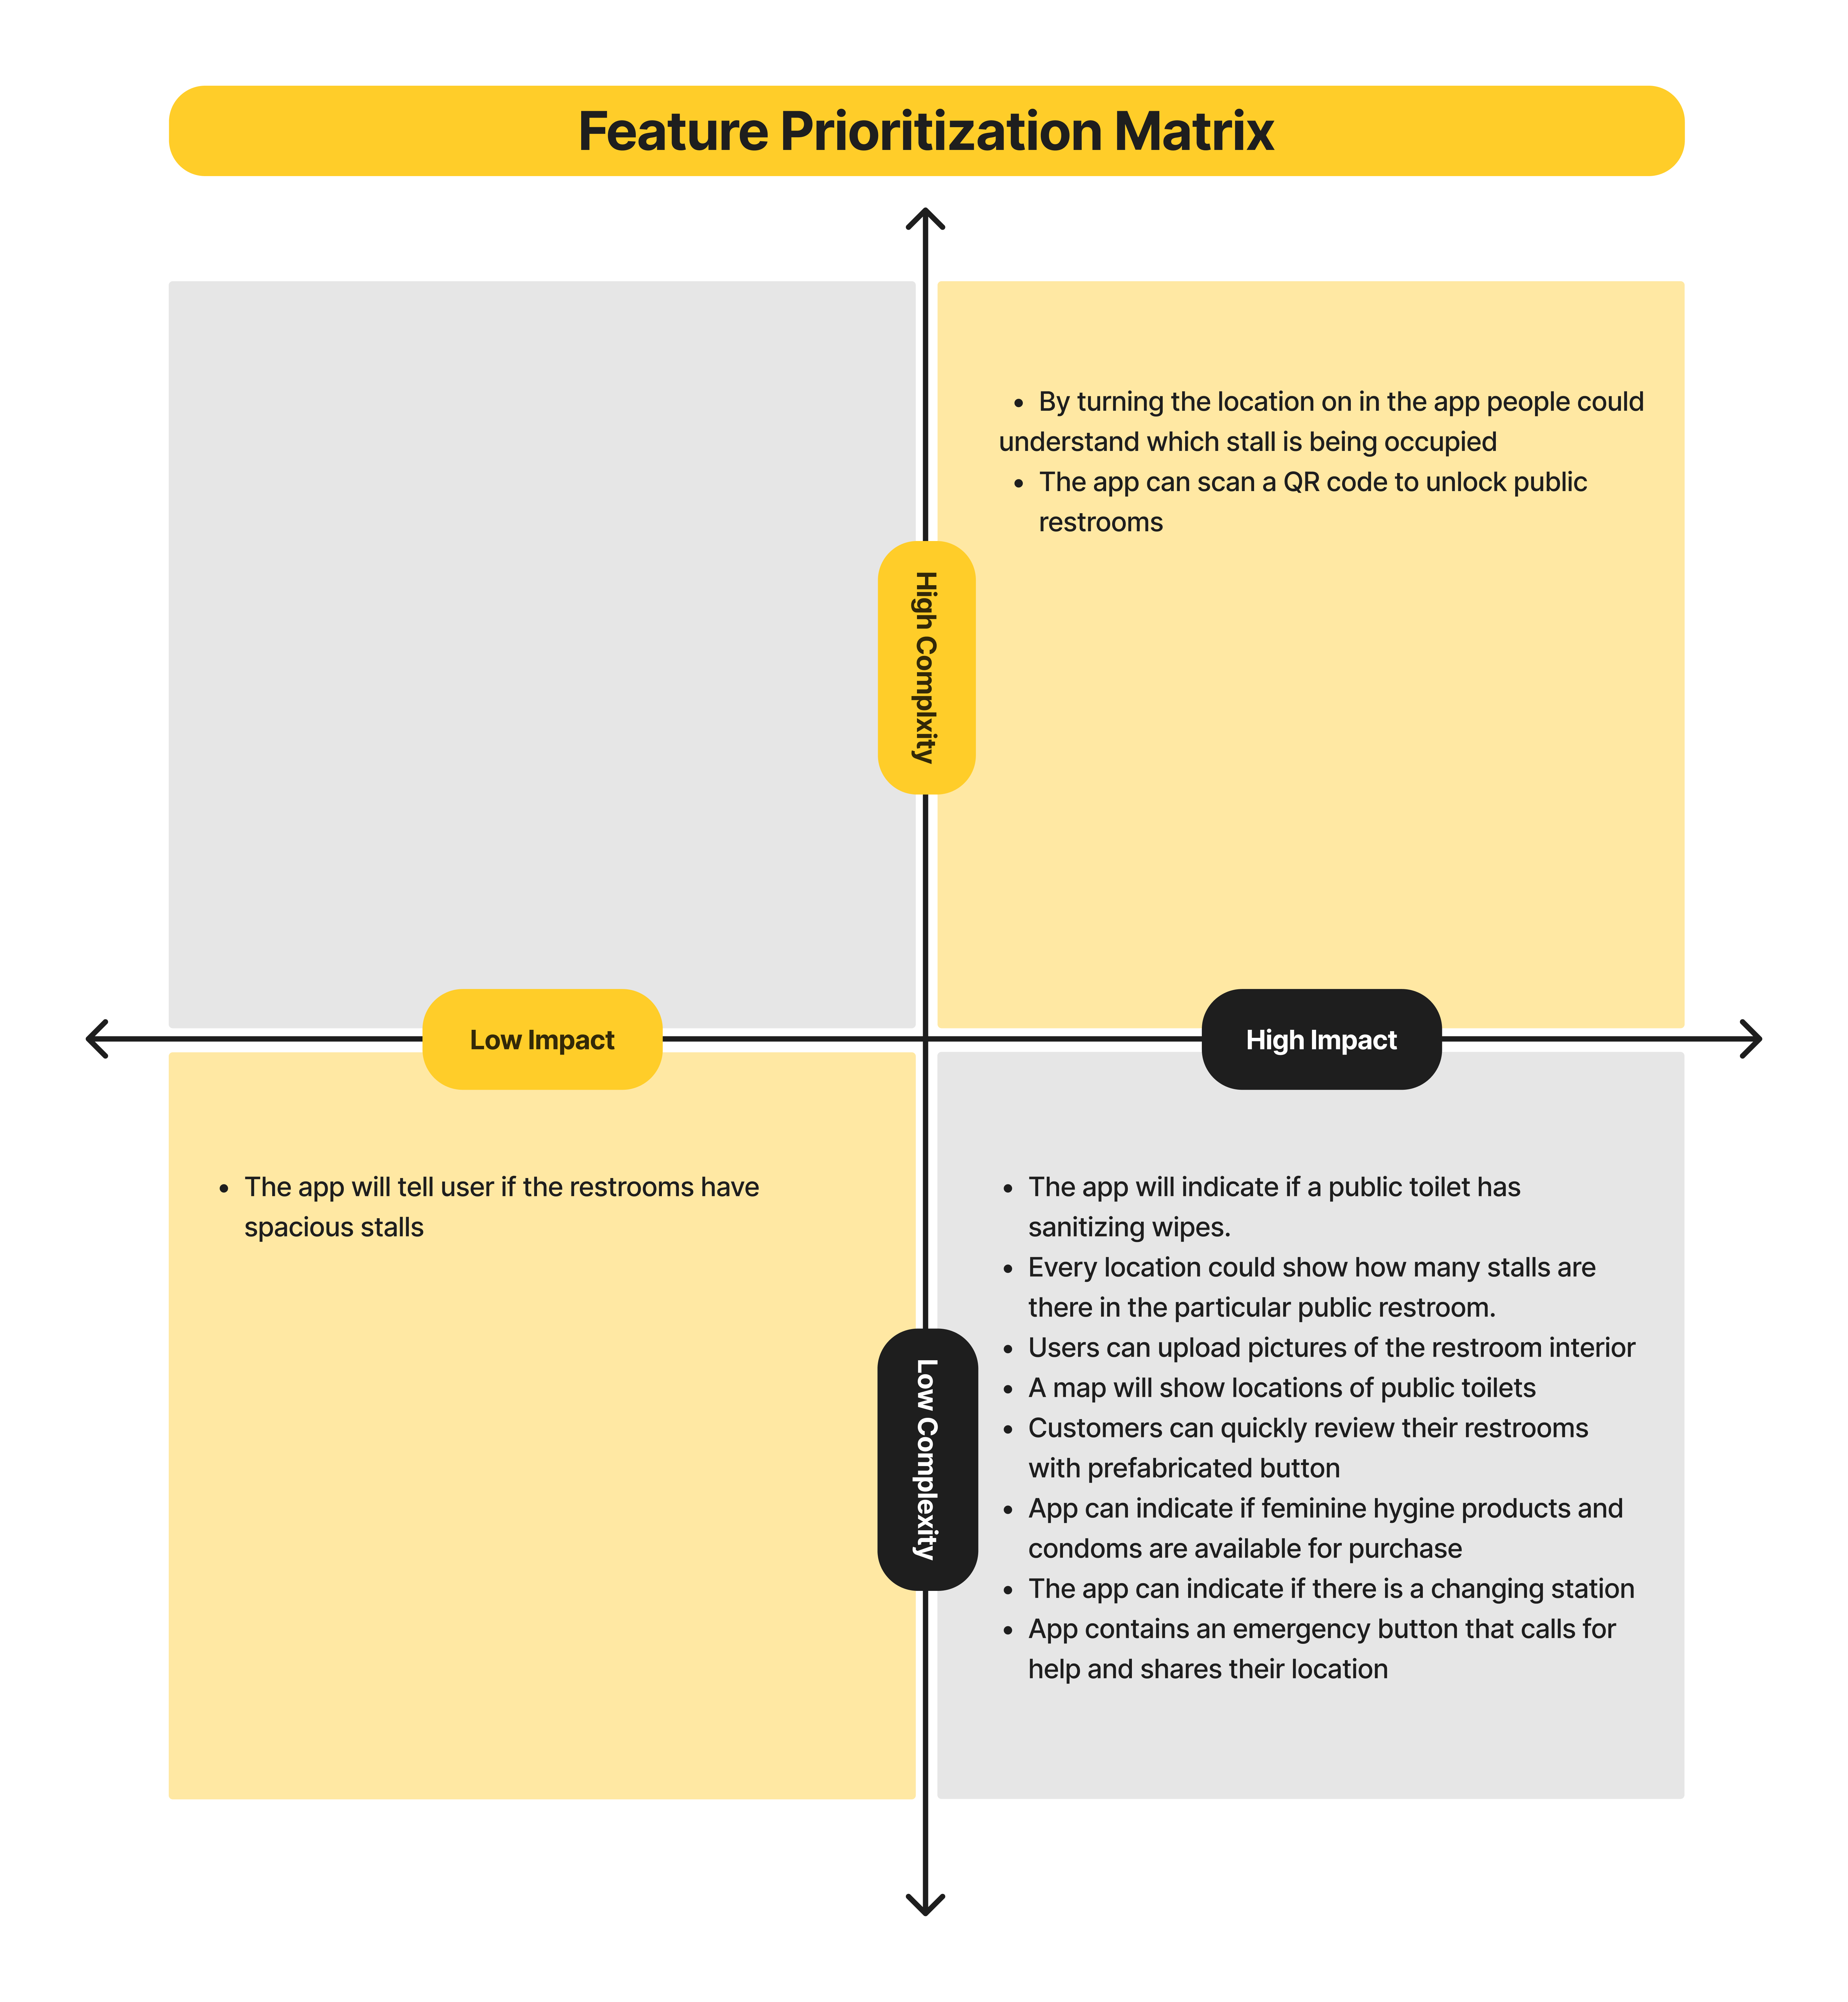 Feature Prioritization Matrix